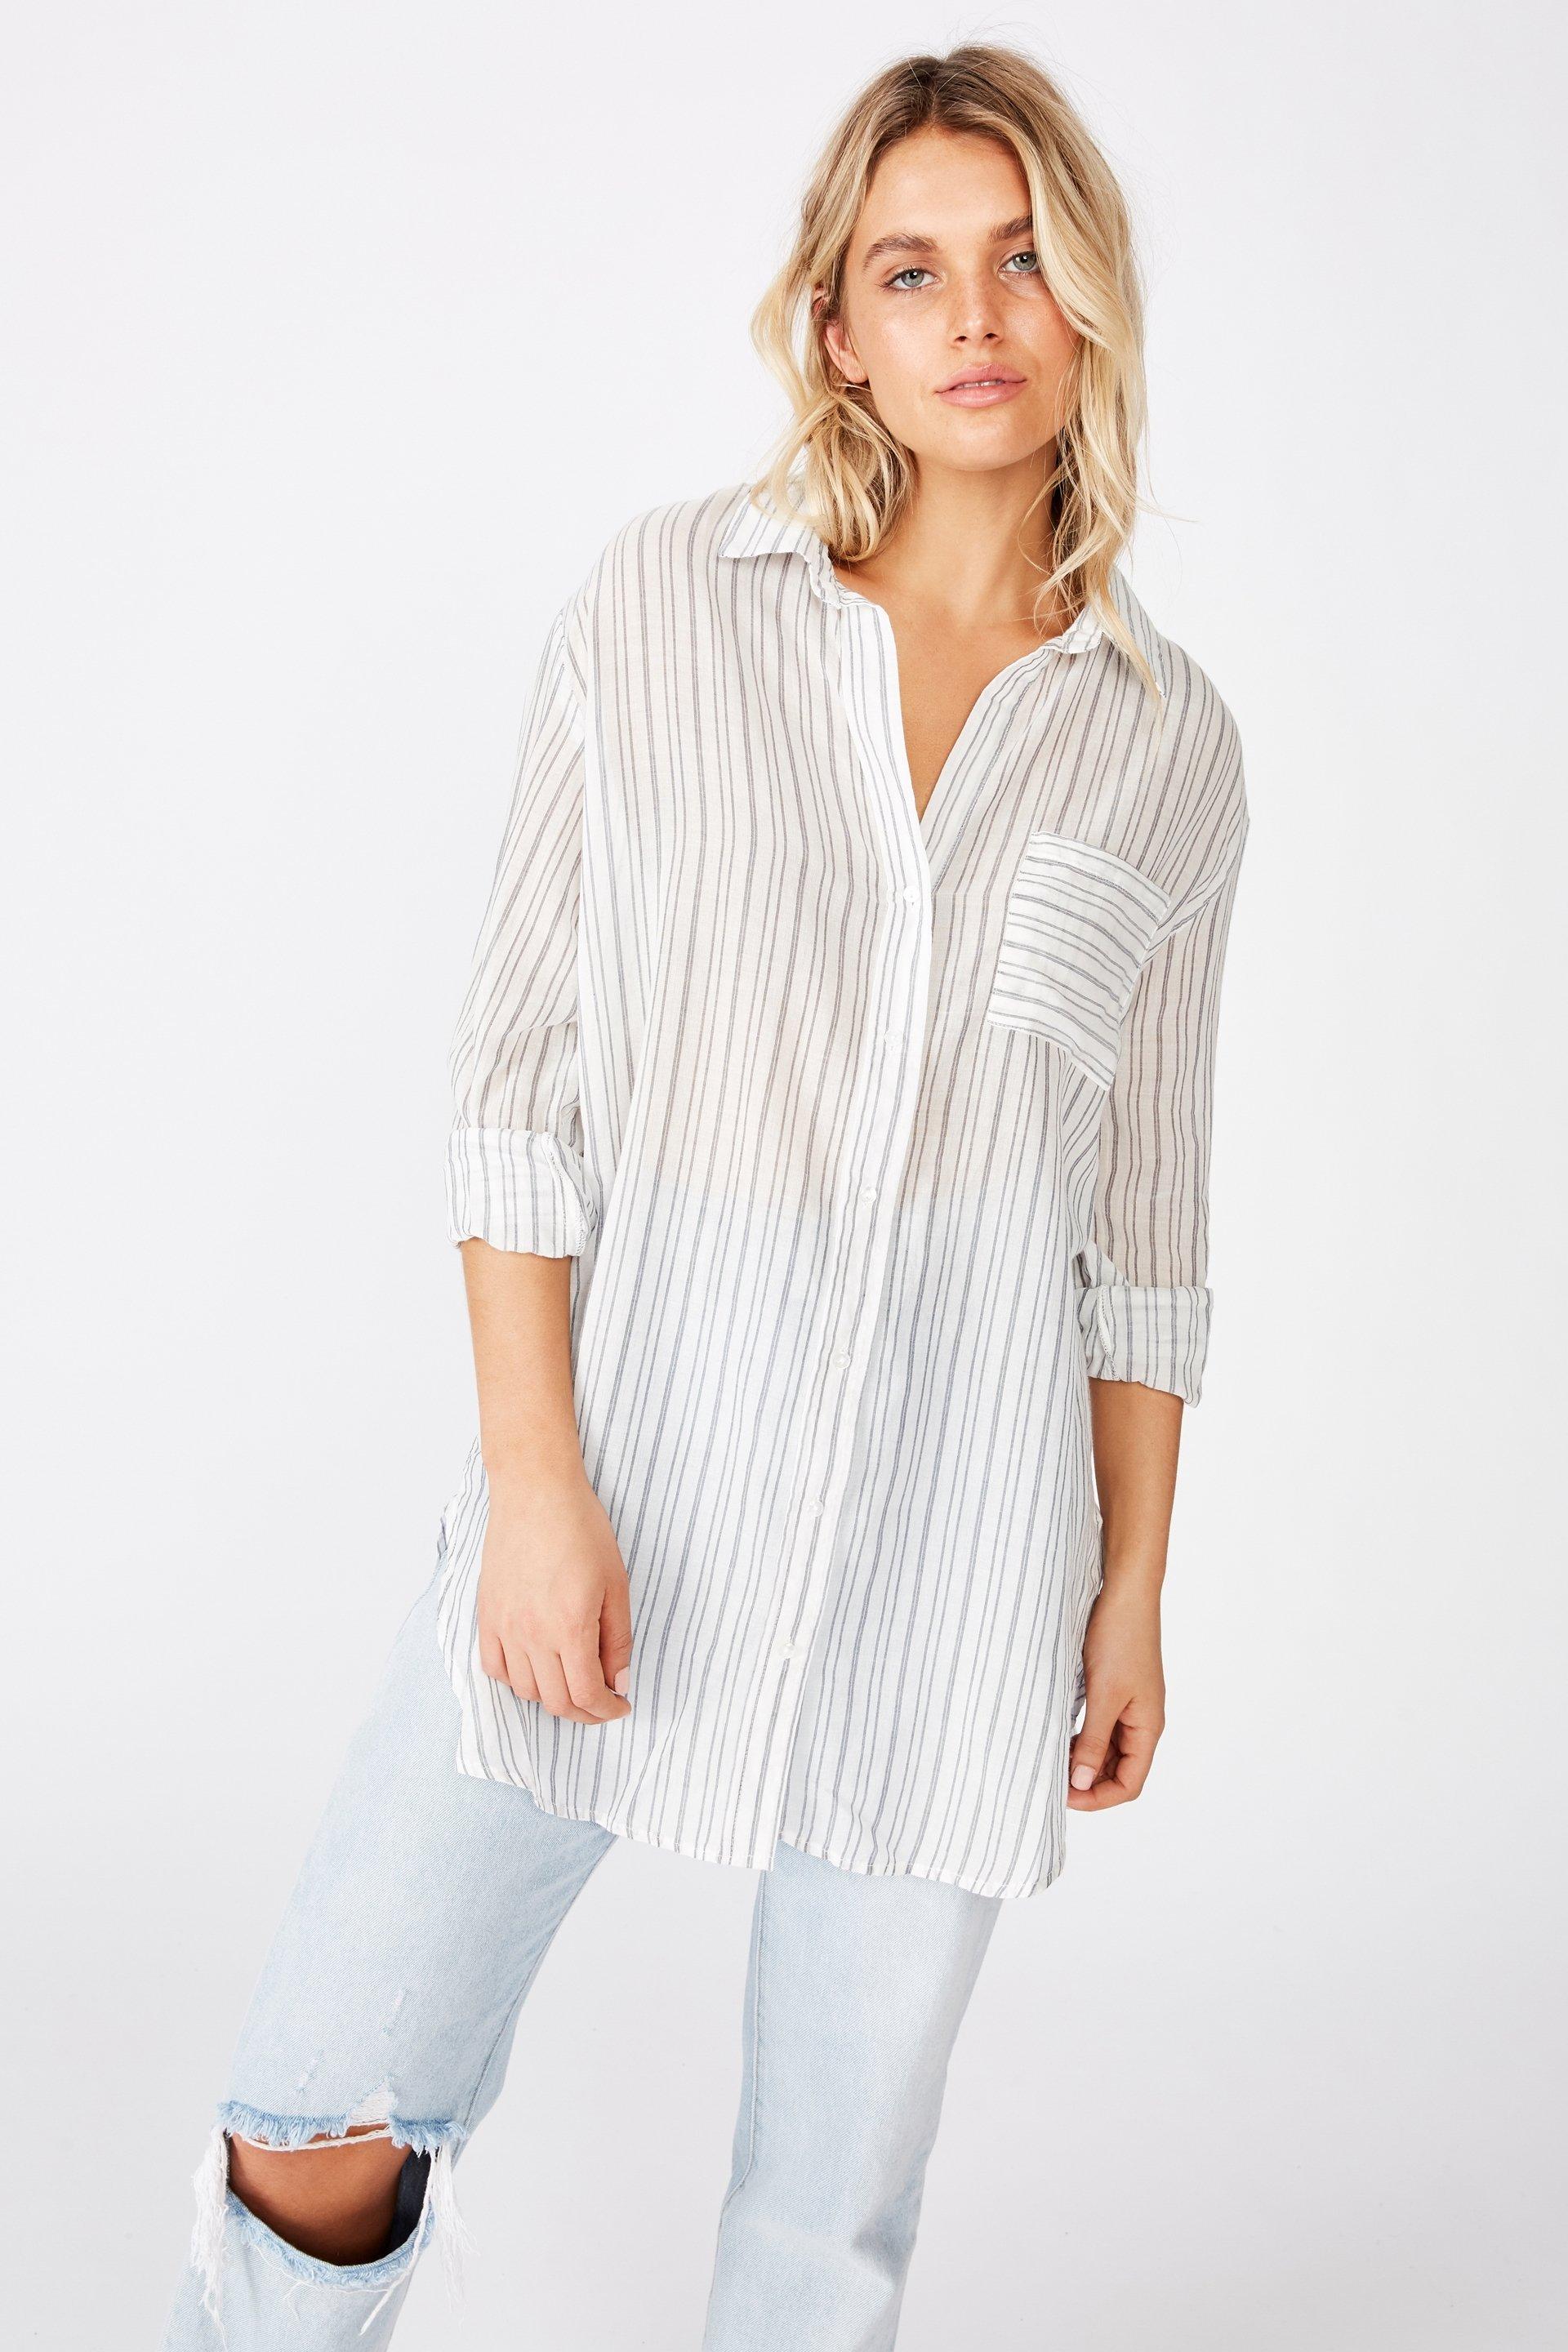 Savannah oversized resort shirt - angie stripes mood indigo Cotton On ...